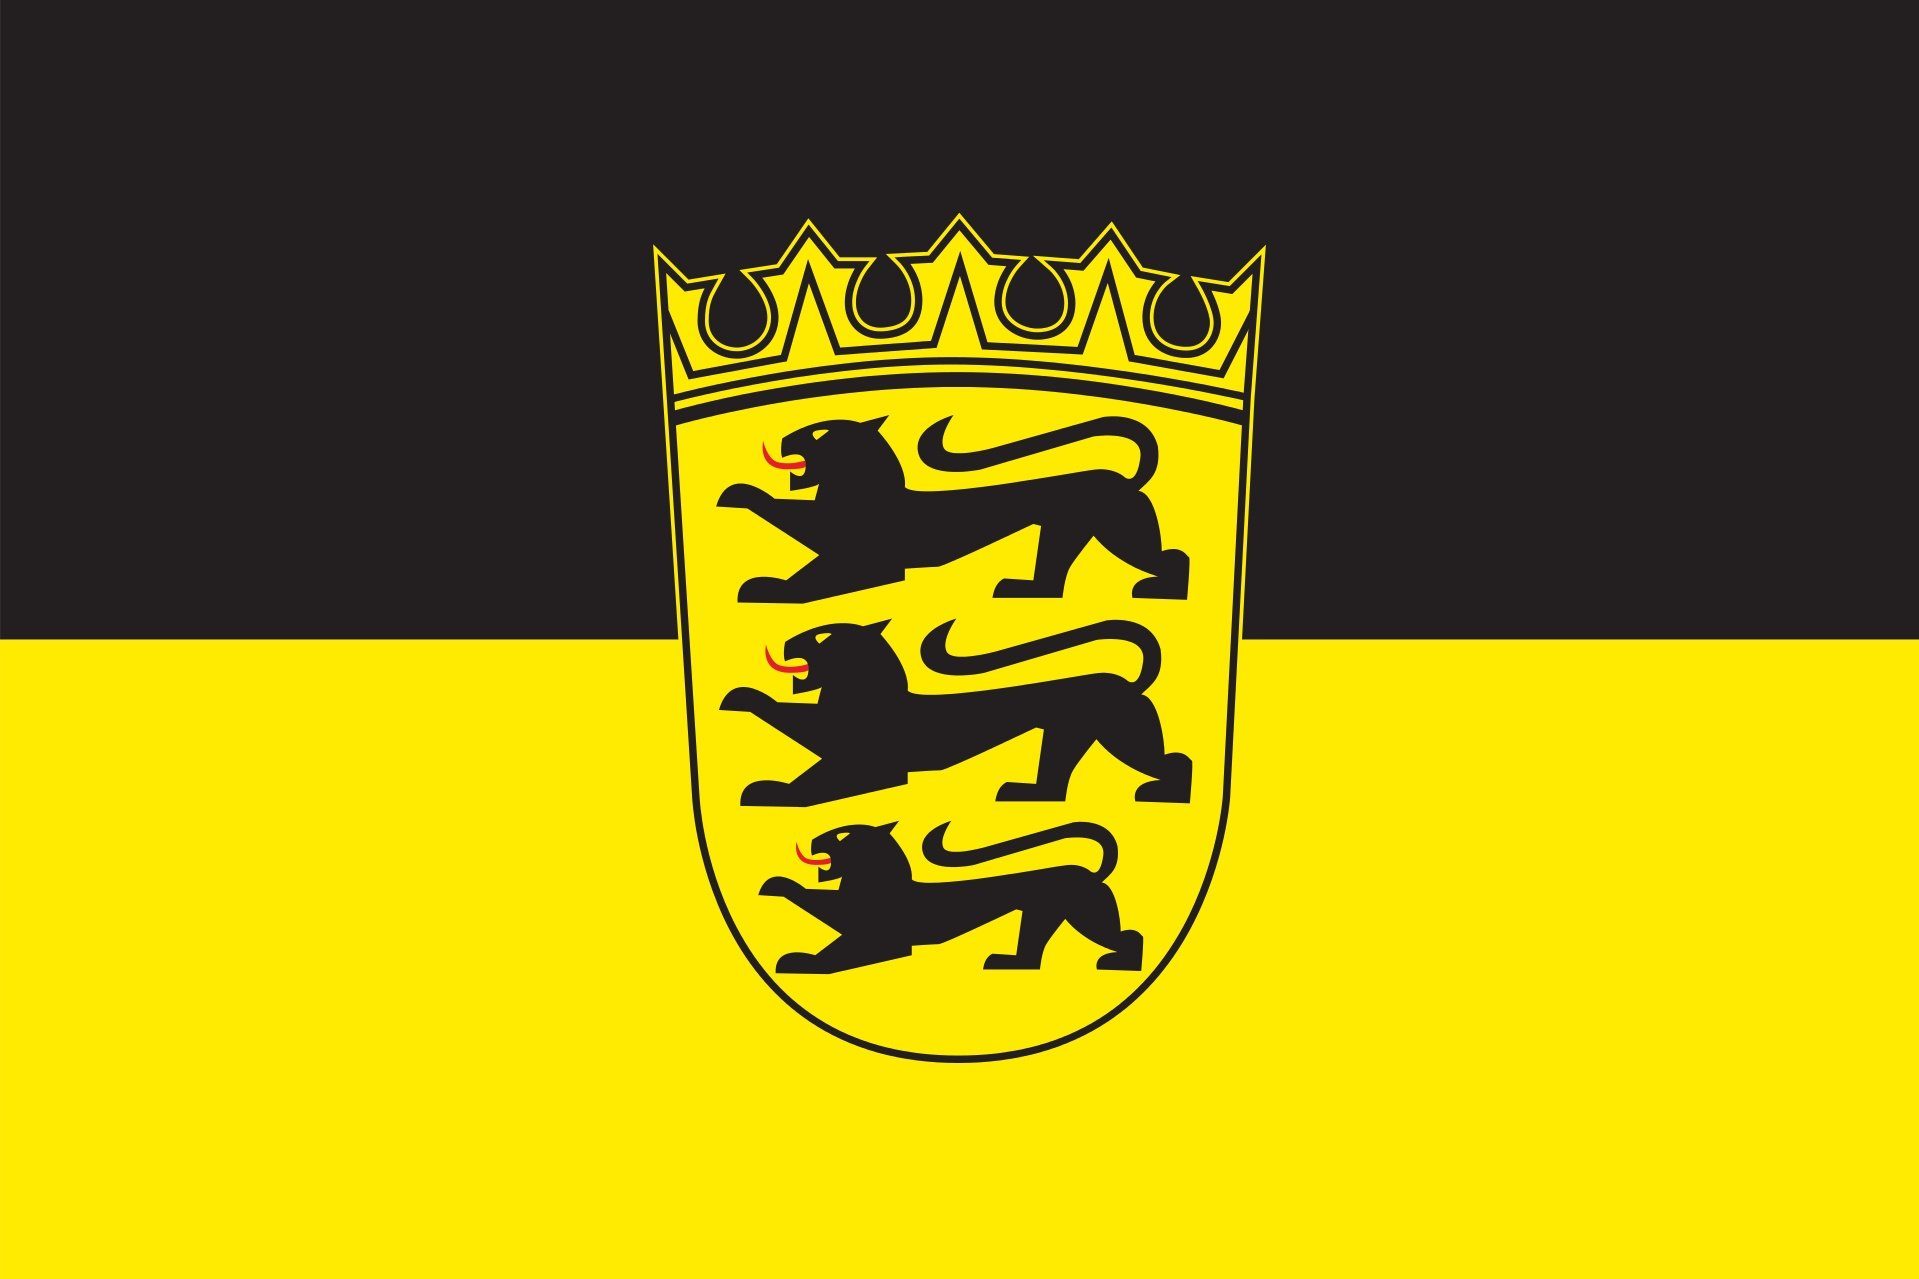 Baden-Württemberg Flagge Querformat g/m² Wappen mit 120 flaggenmeer